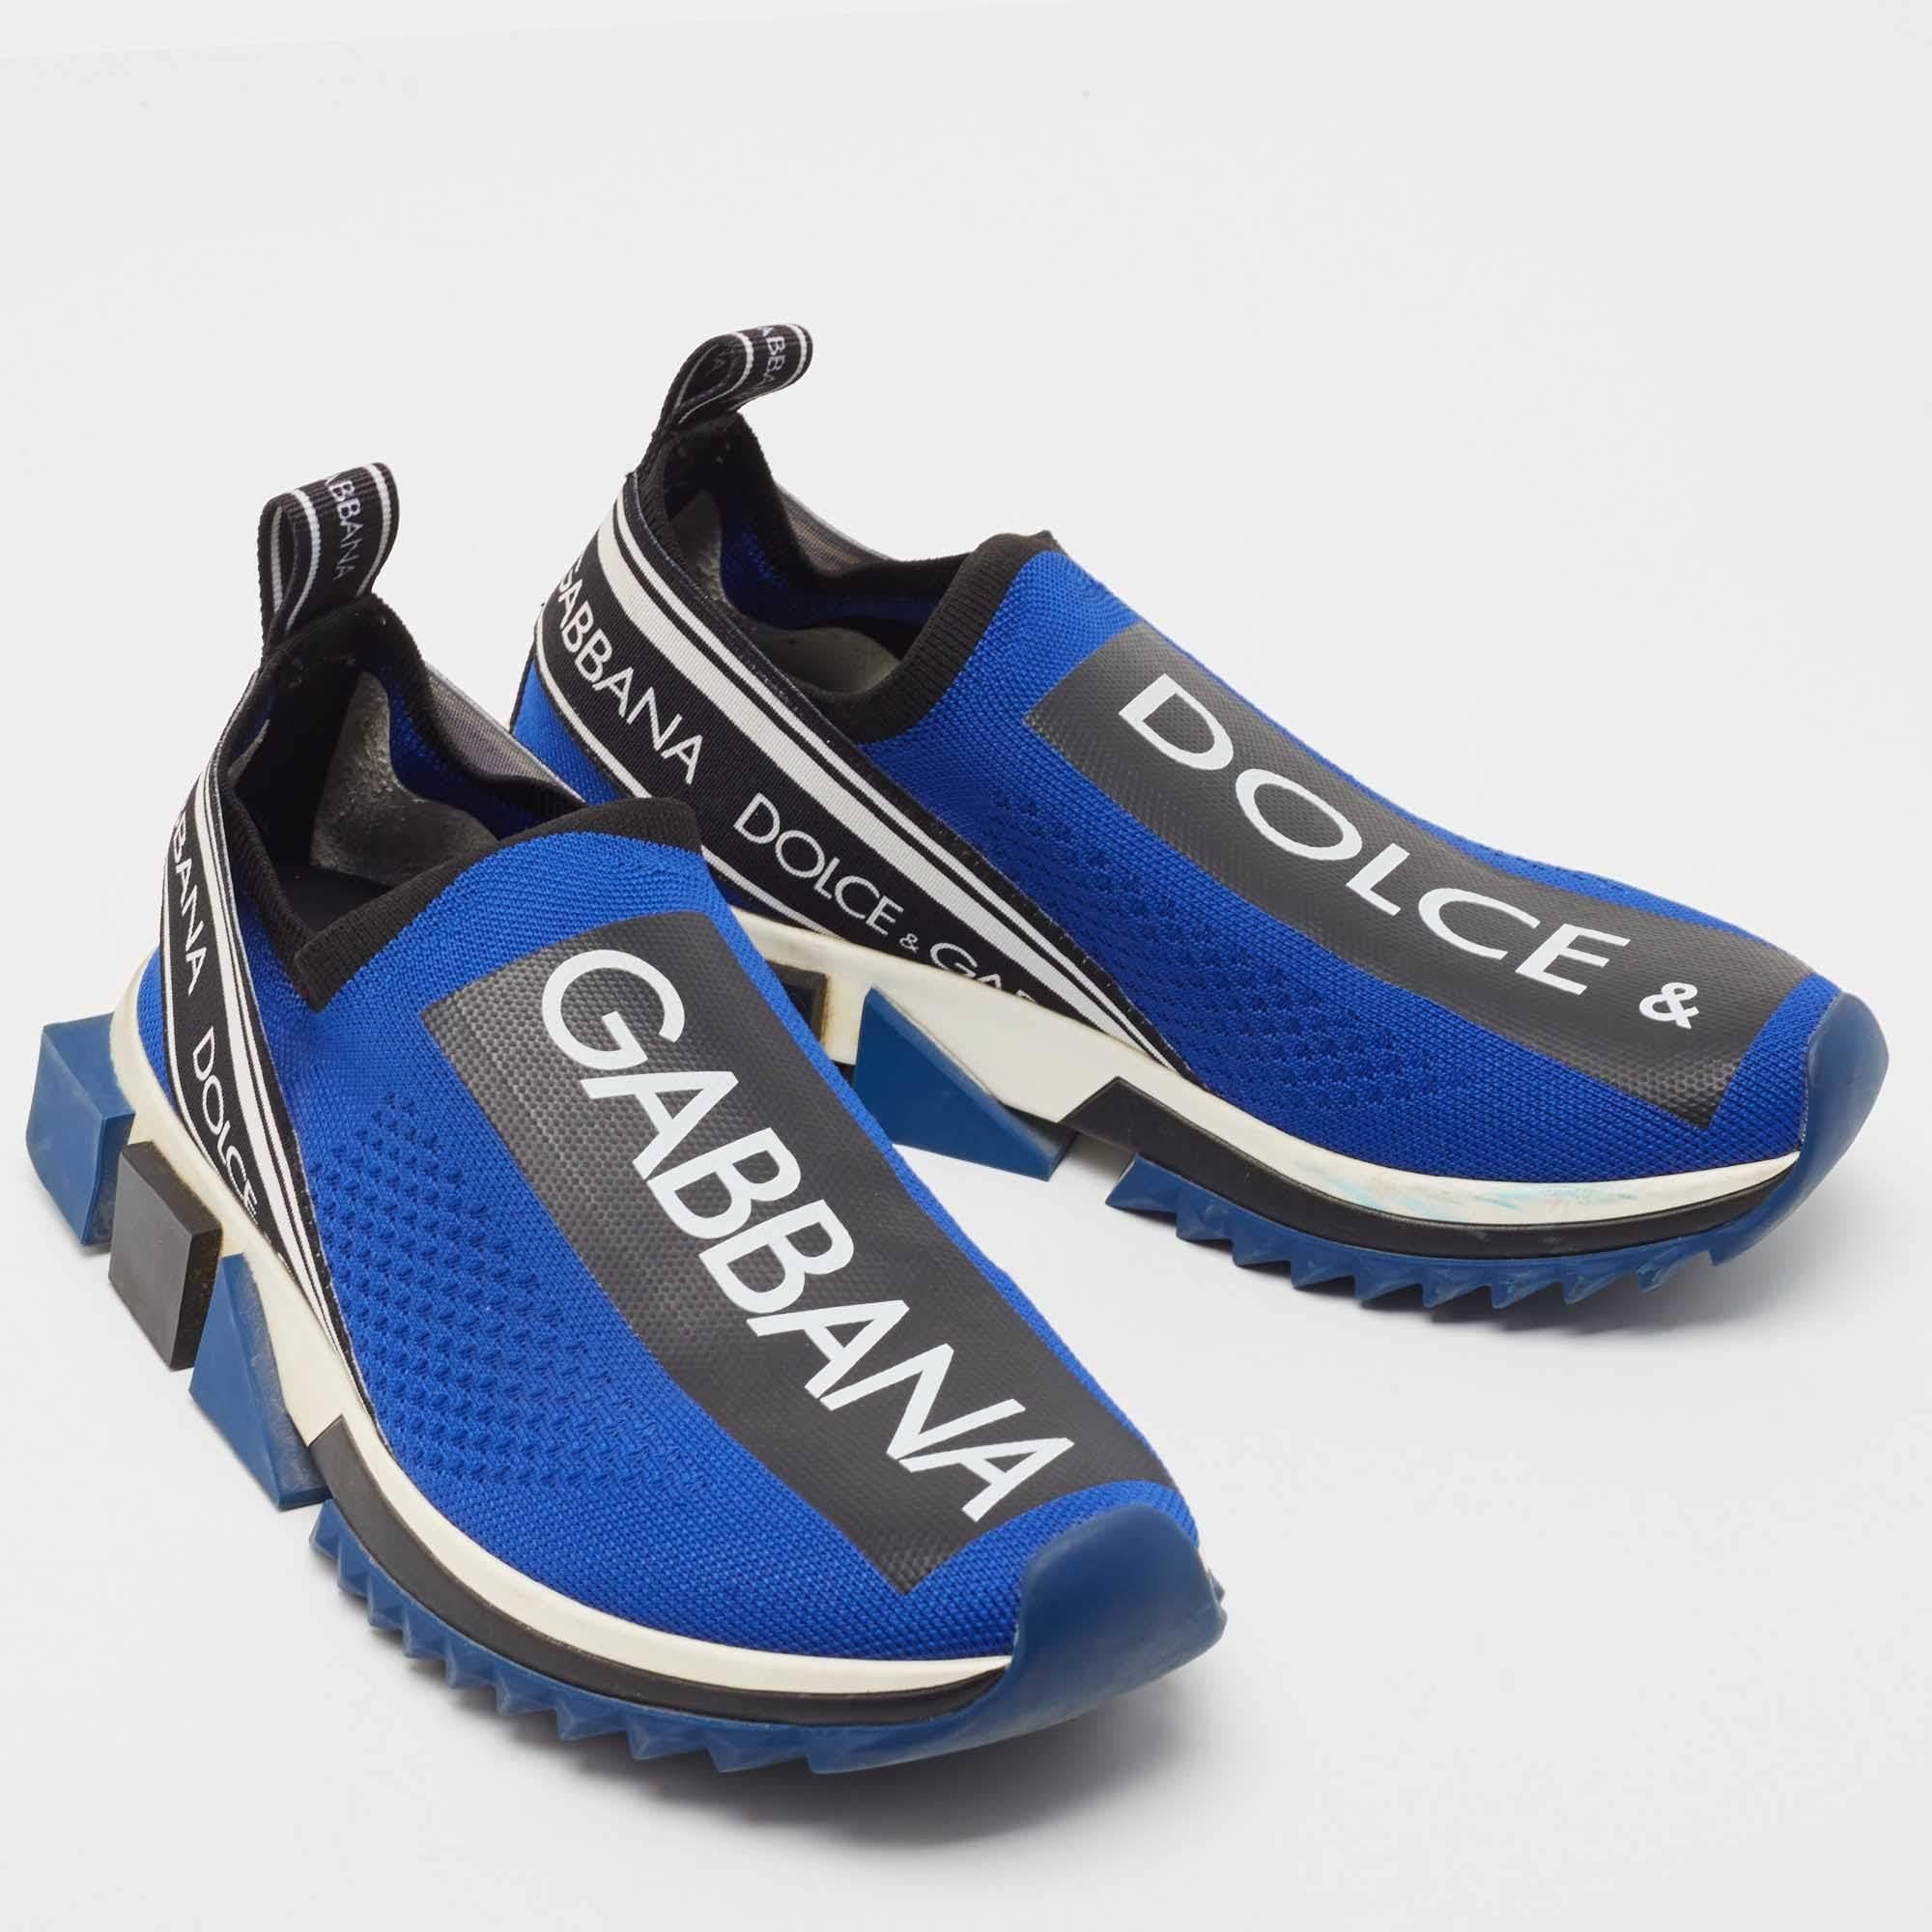 Dolce & Gabbana Blue/Black Knit Fabric Sorrento Sneakers Size 39 13